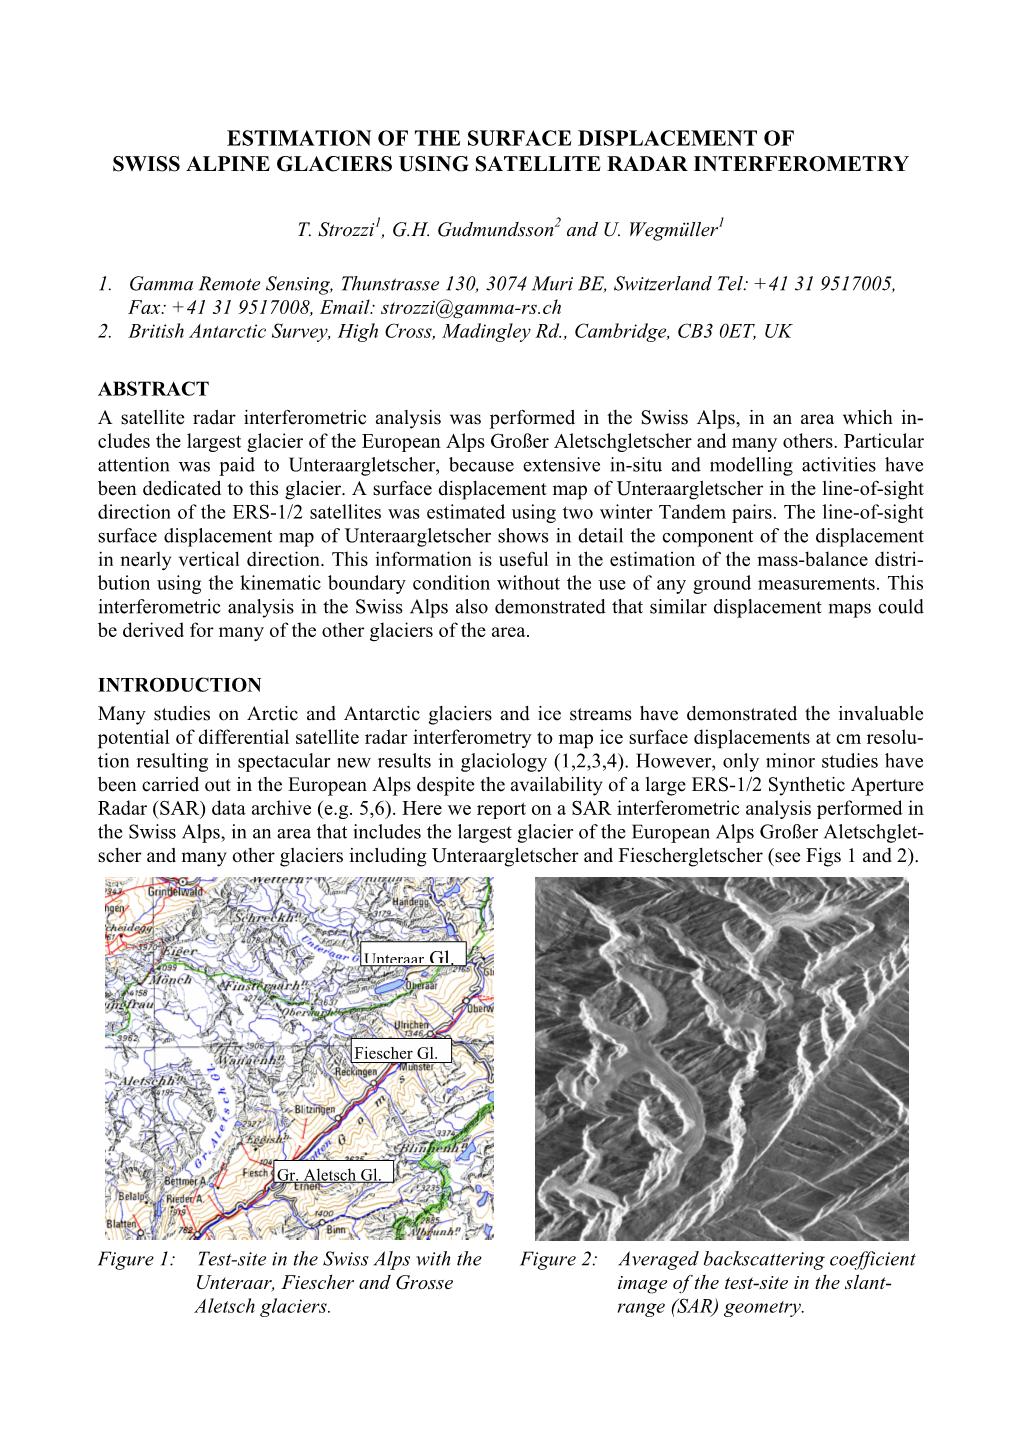 Estimation of the Surface Displacement of Swiss Alpine Glaciers Using Satellite Radar Interferometry